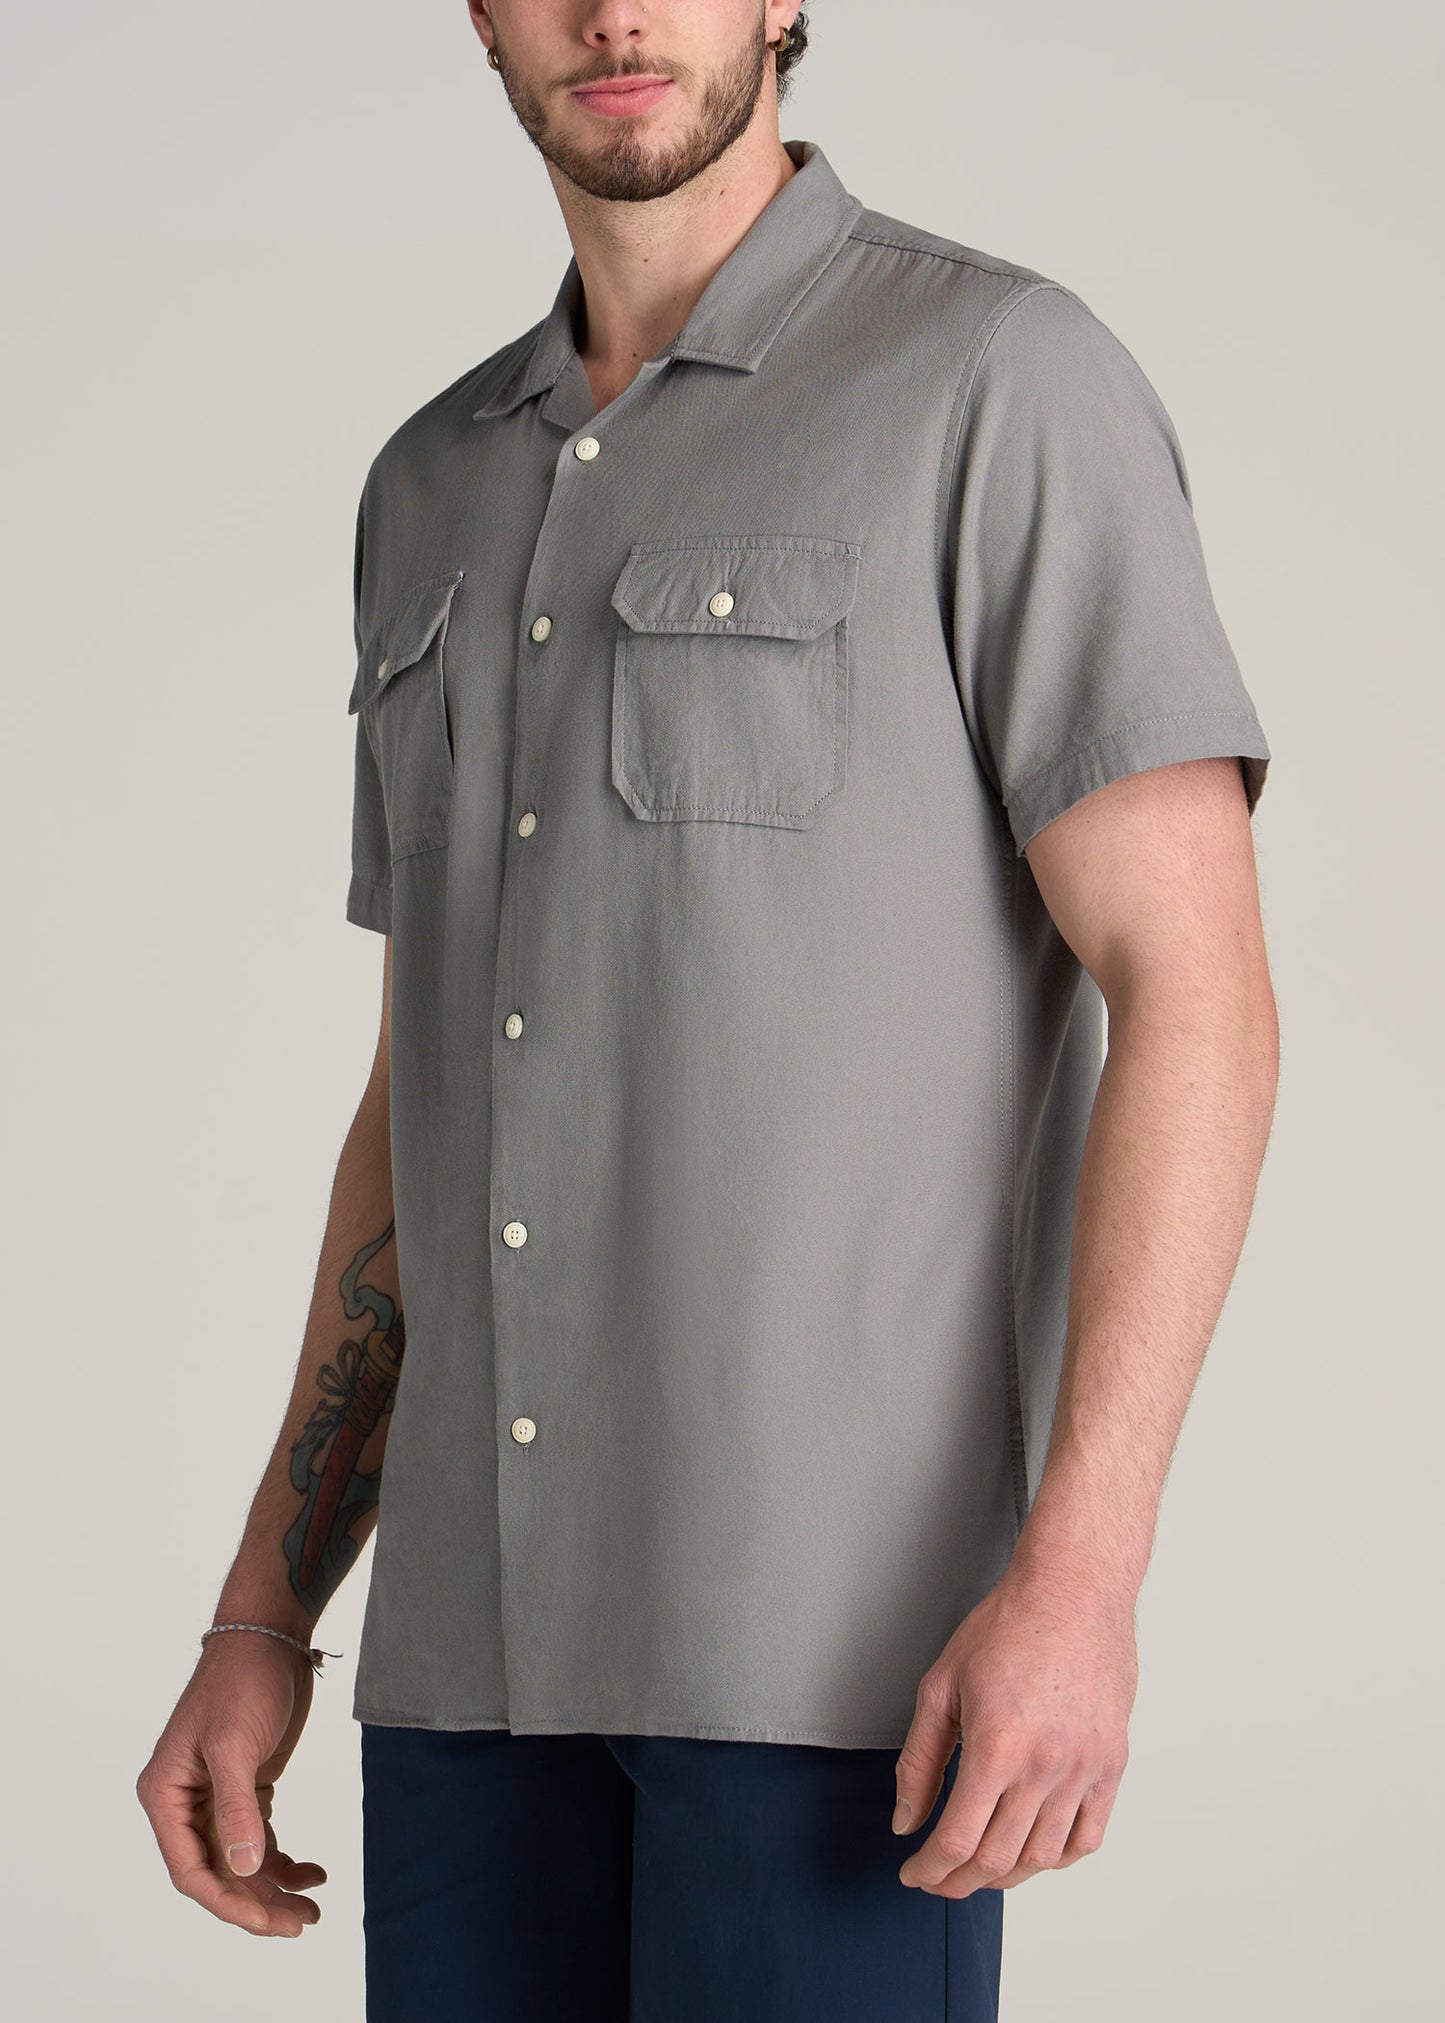 Men's Two Pocket Shirts: Tall Men Camp Pewter Shirt | American Tall